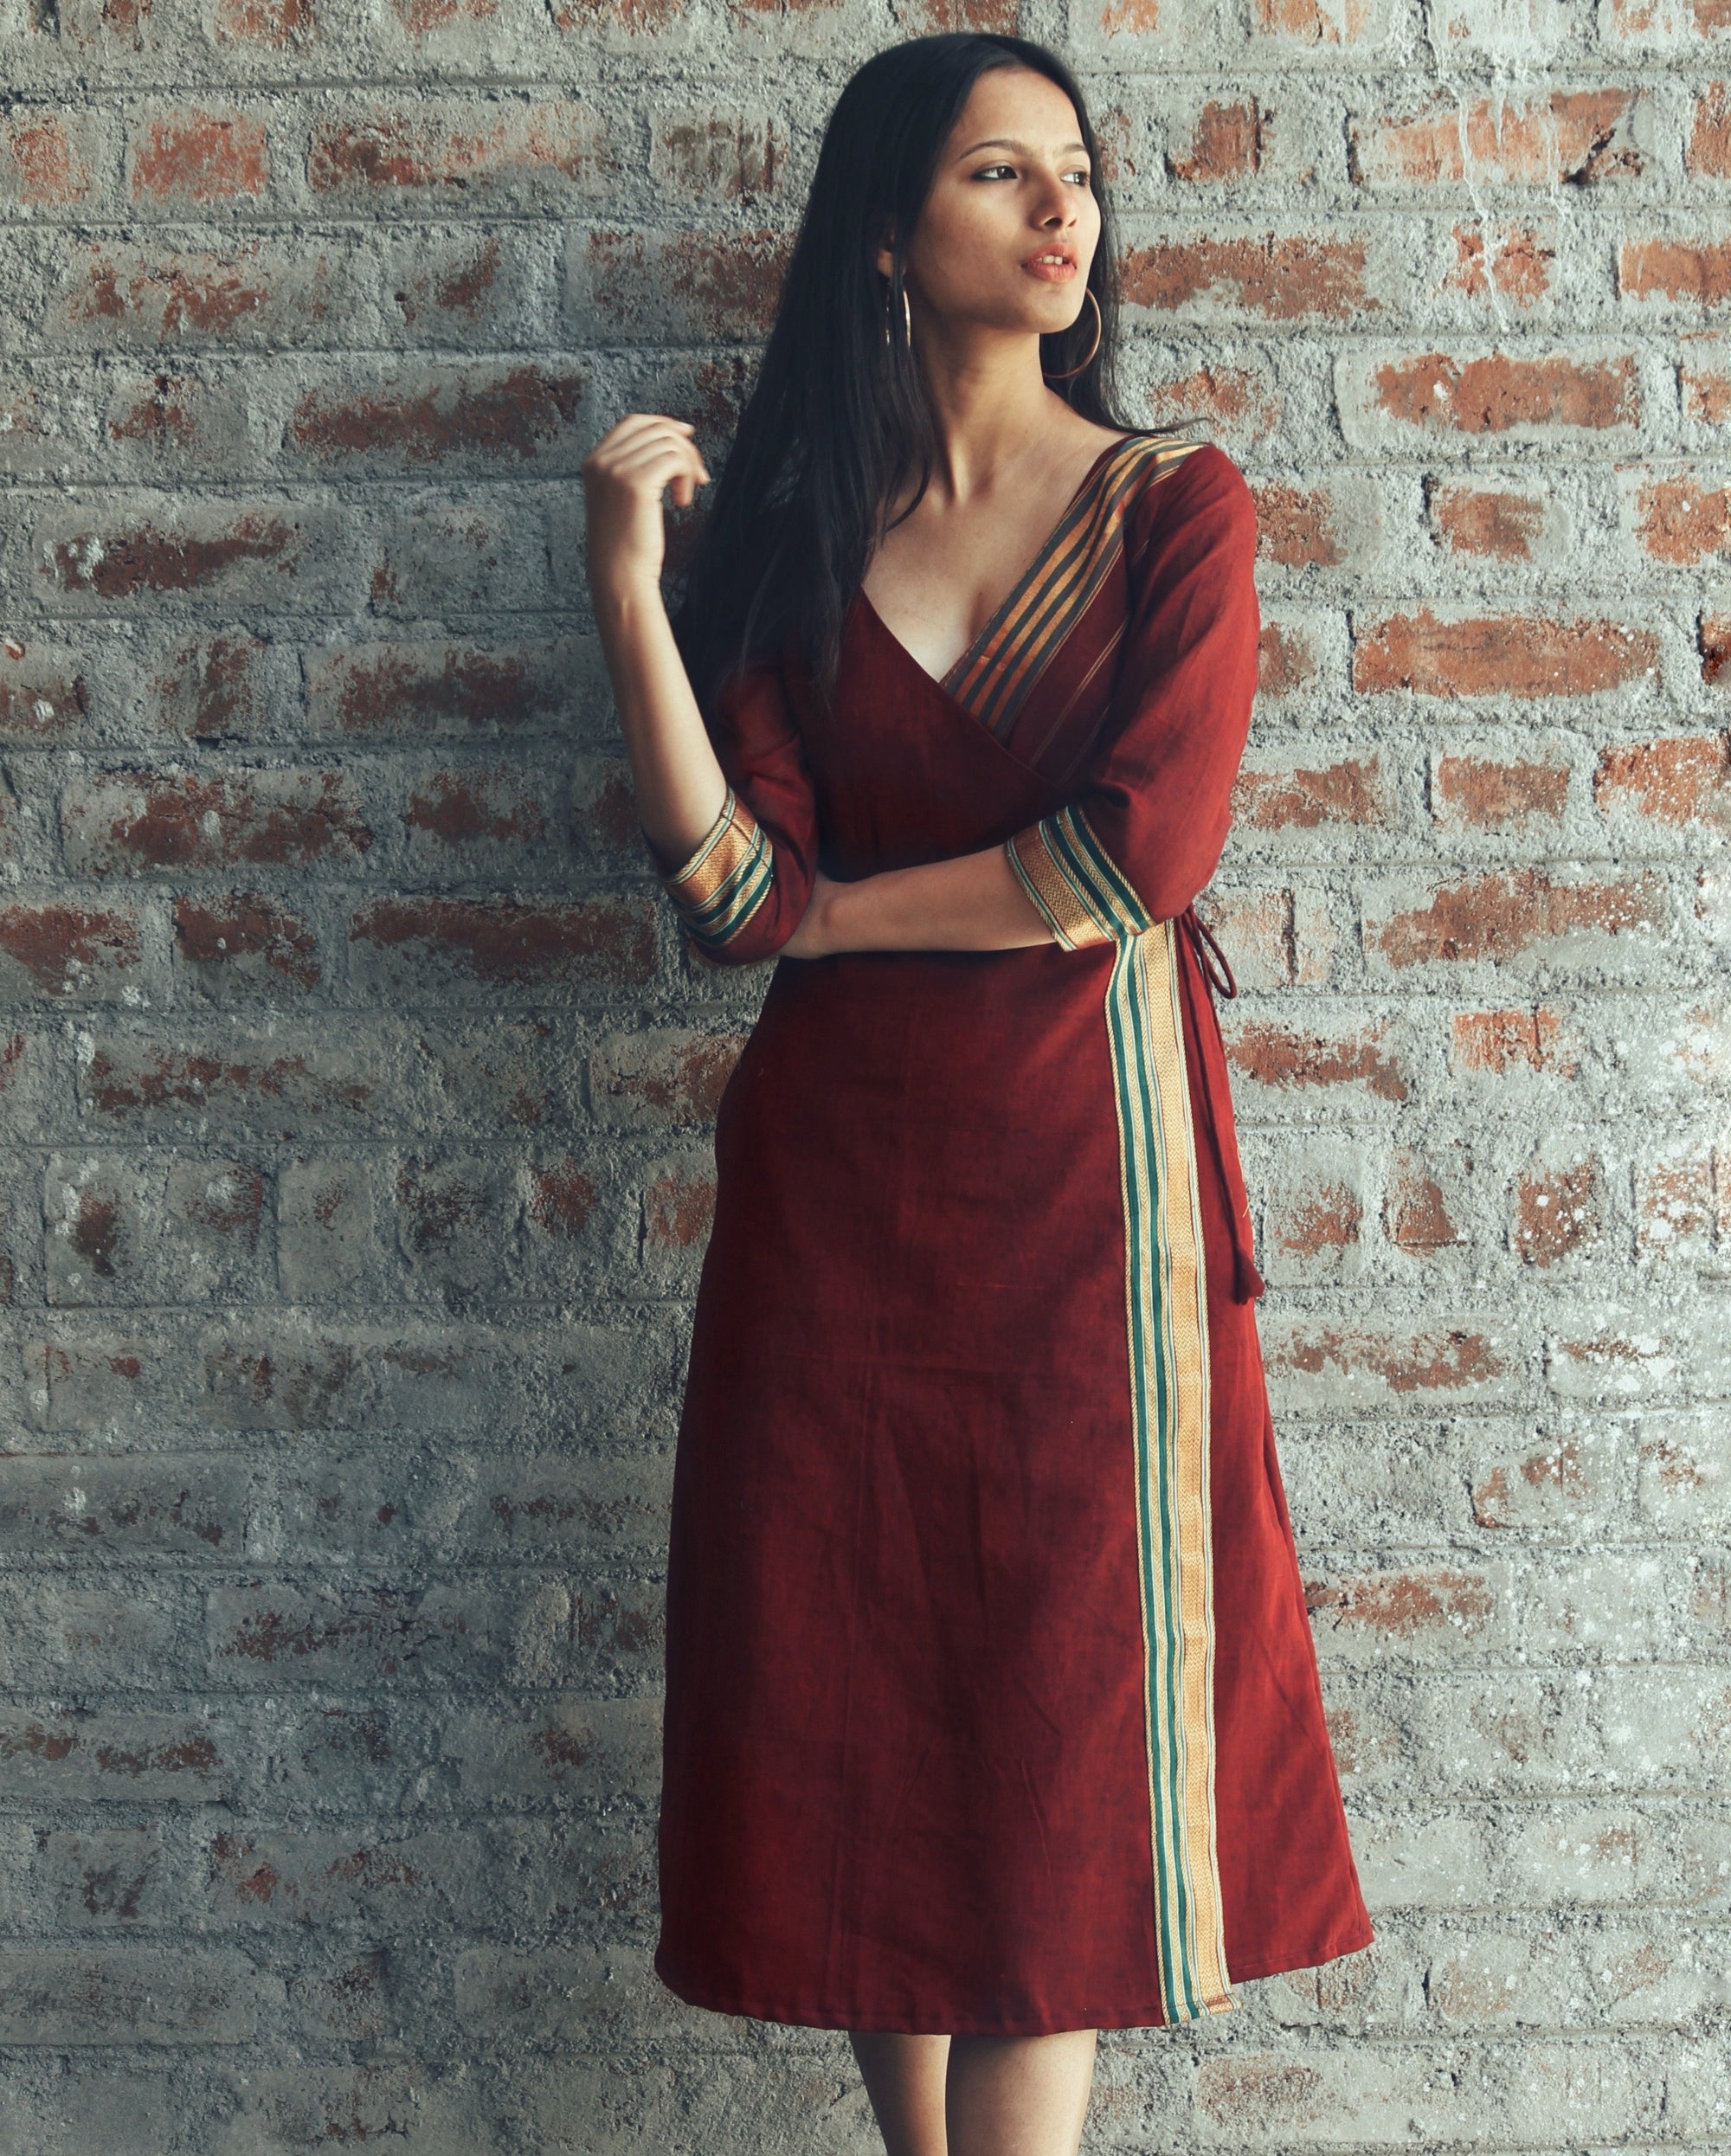 Printed Cotton Silk Saree And Dress at Rs 2800 in Chennai | ID: 19040775462